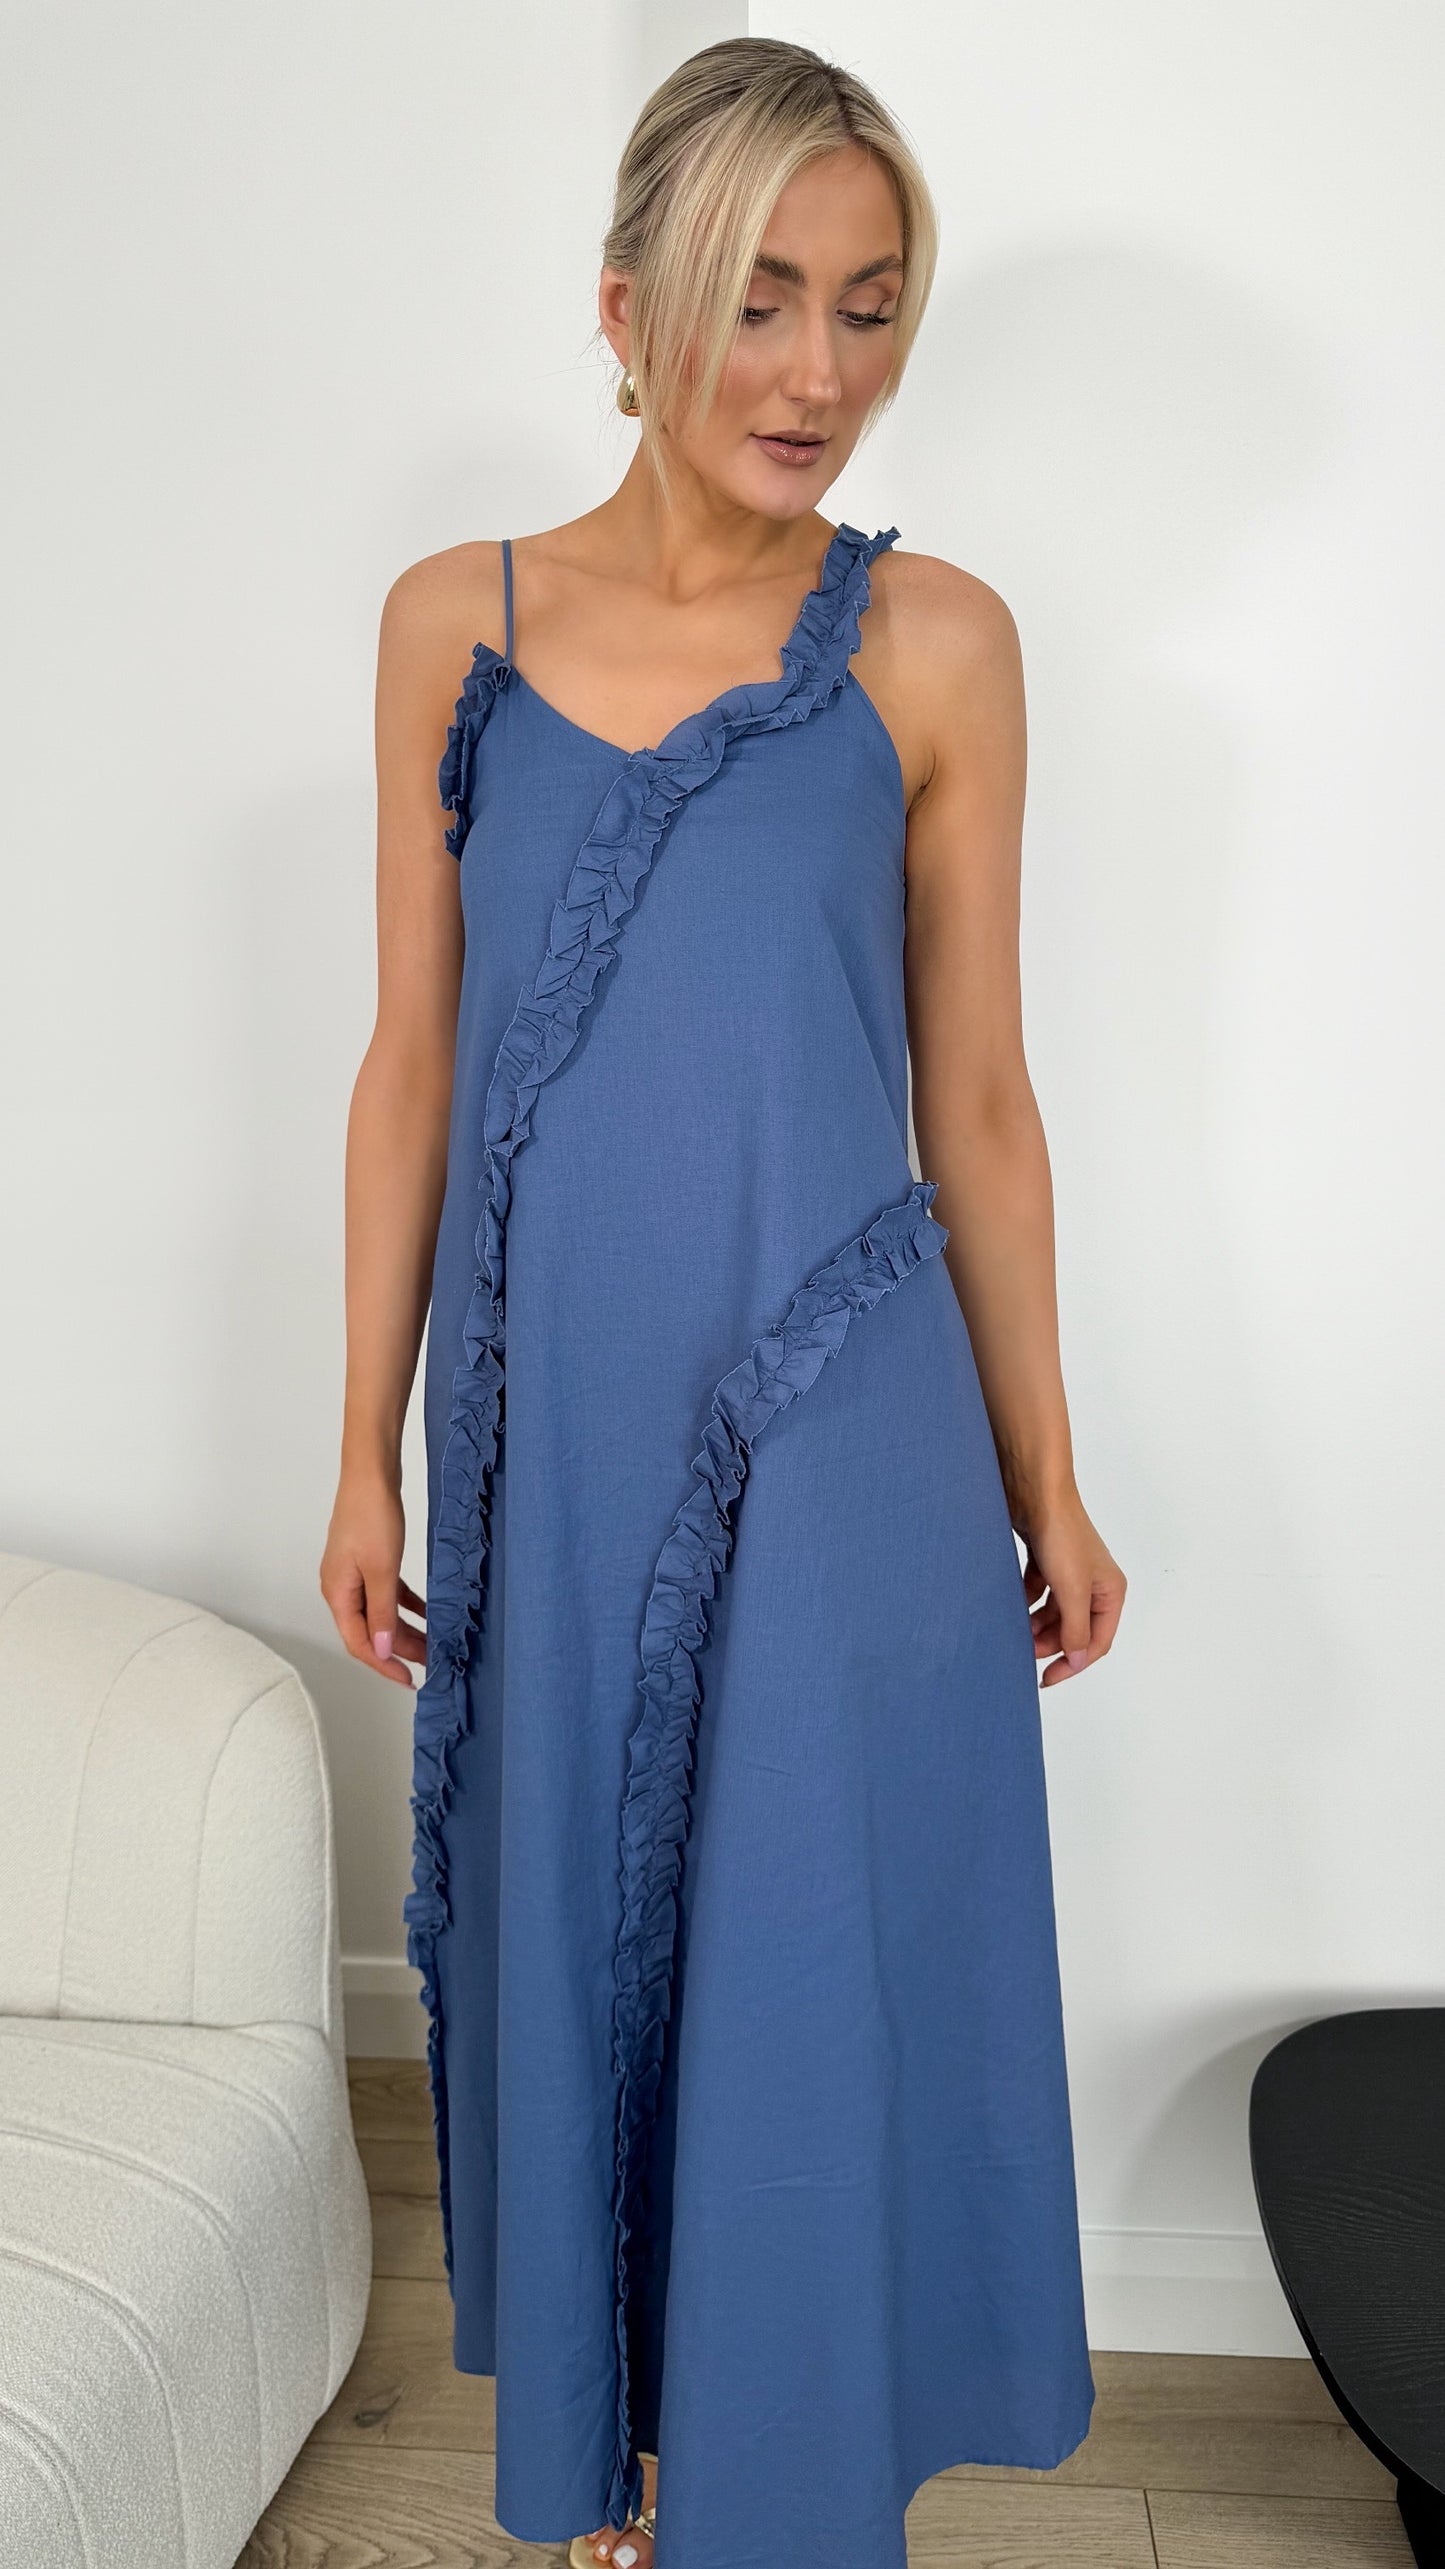 Aulina Irregular Ruffle Detail Maxi Dress - Blue